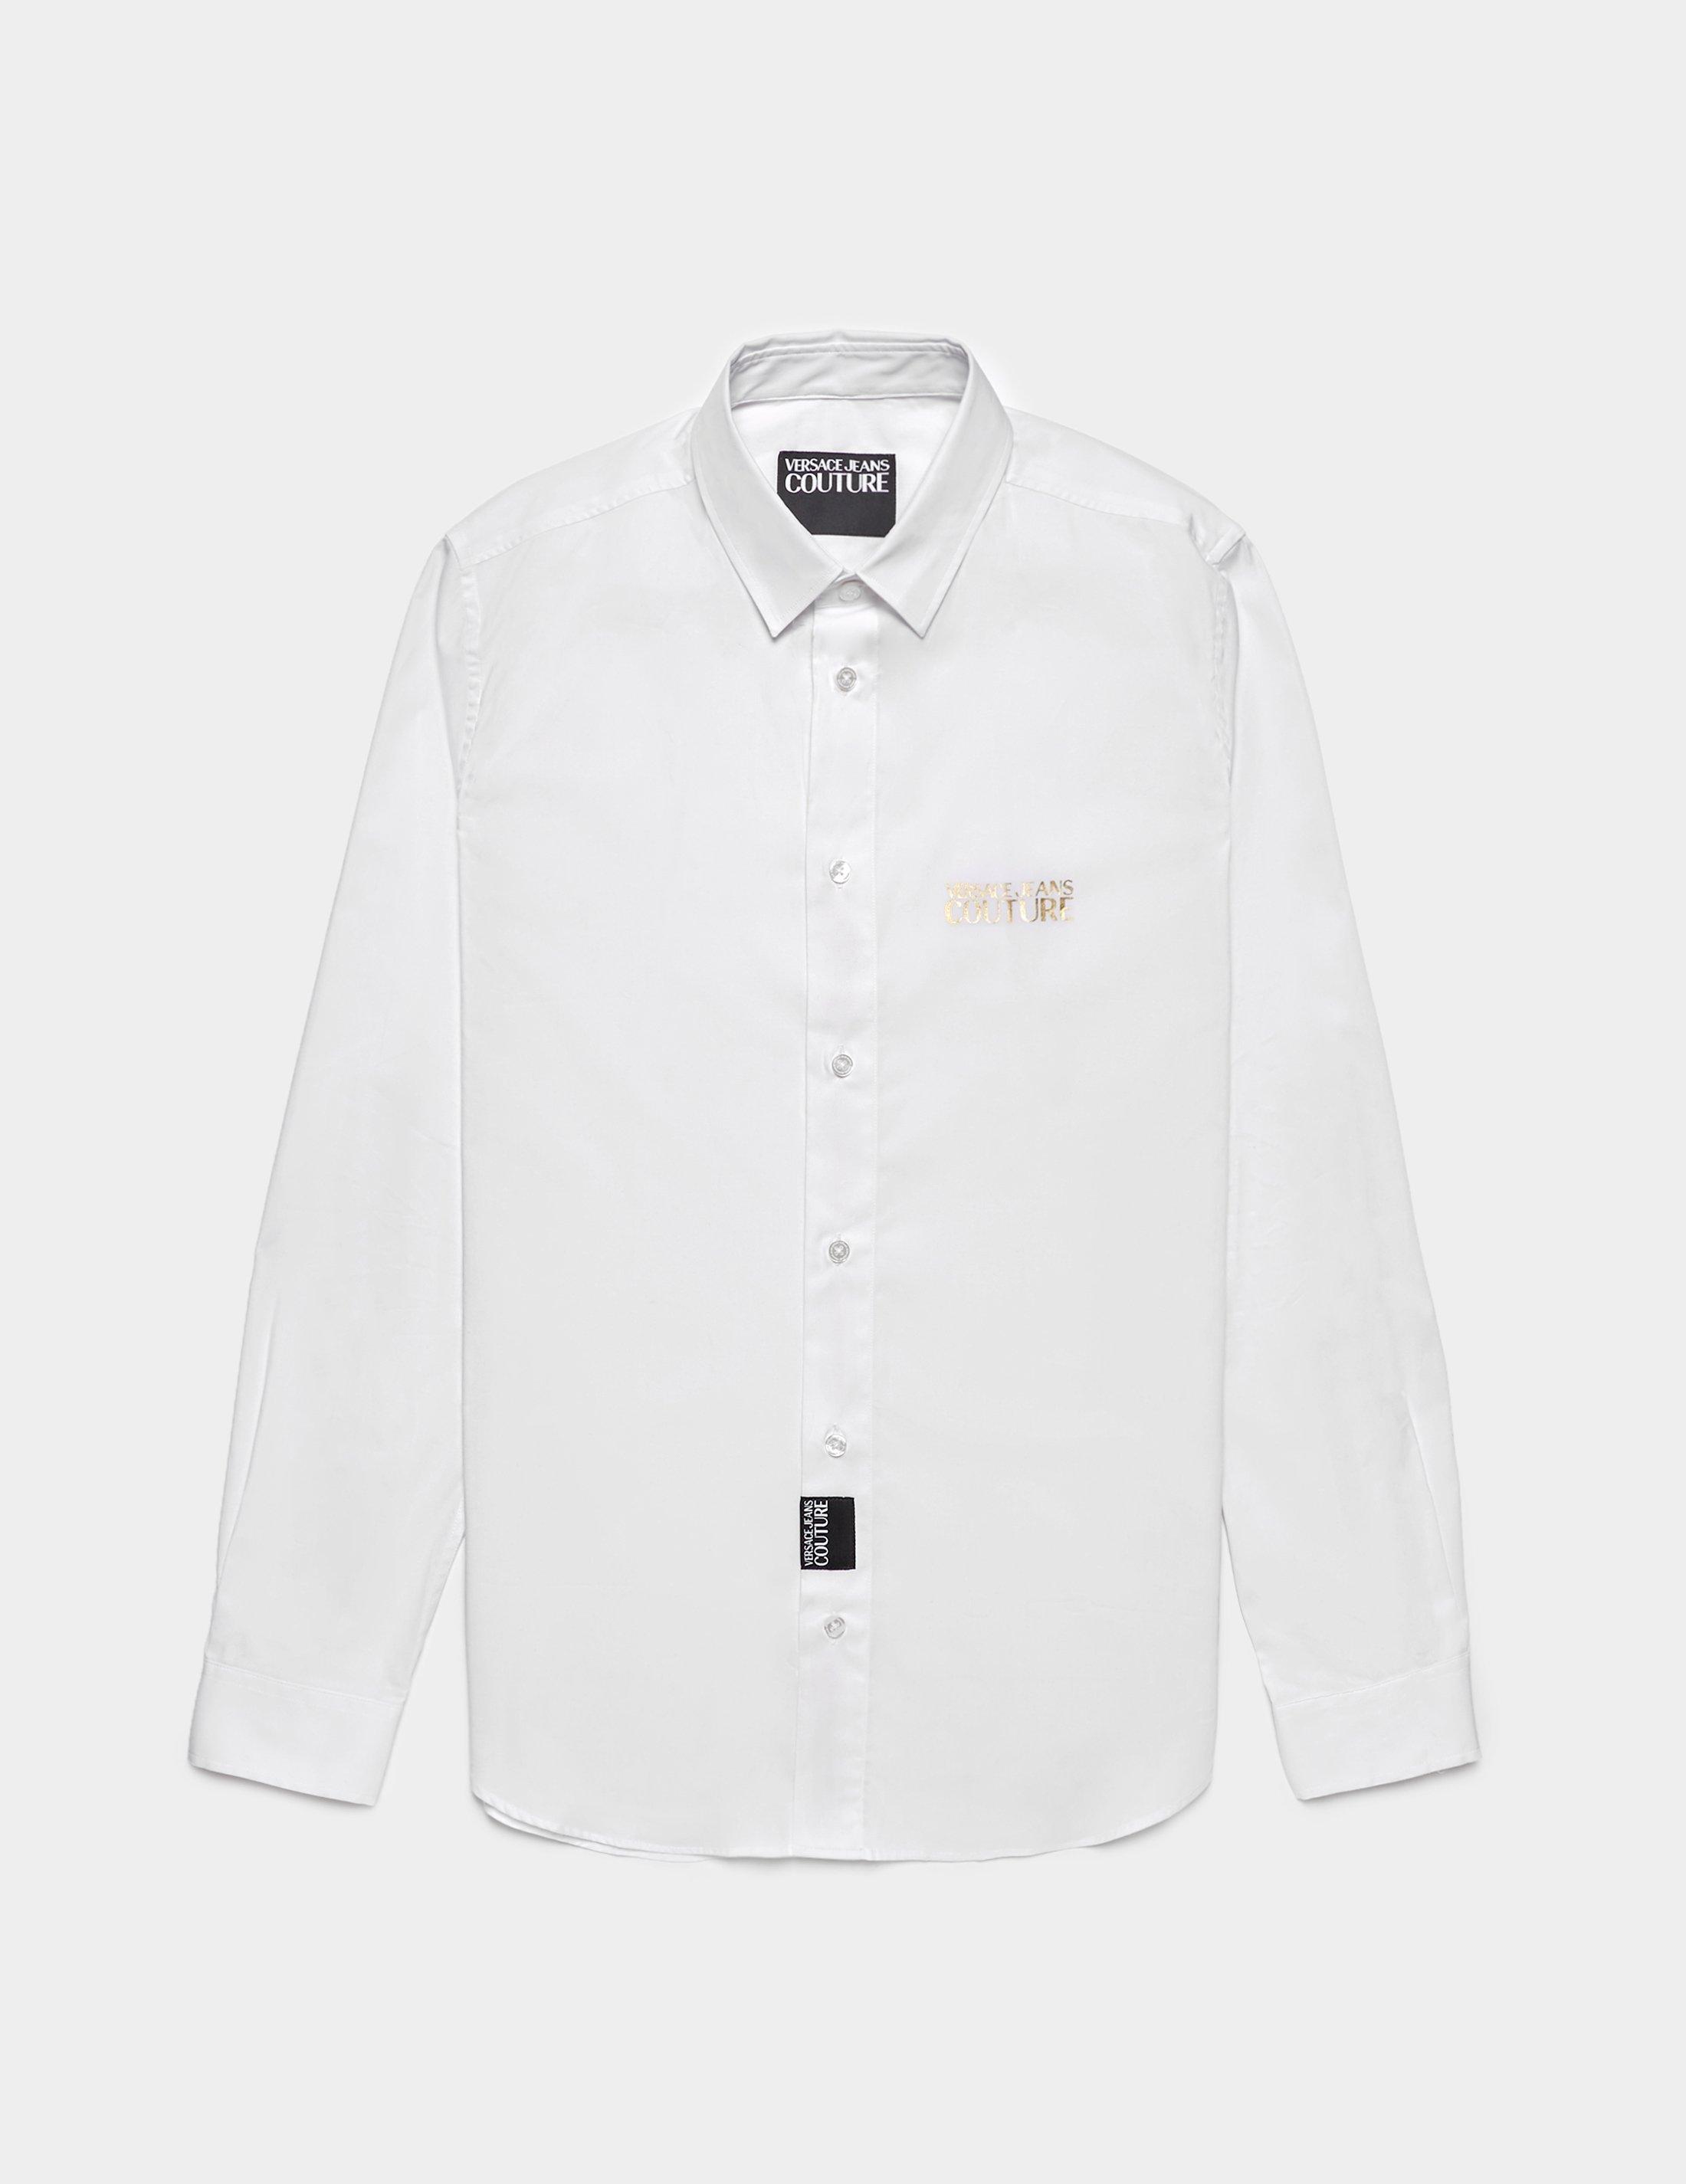 versace white long sleeve shirt